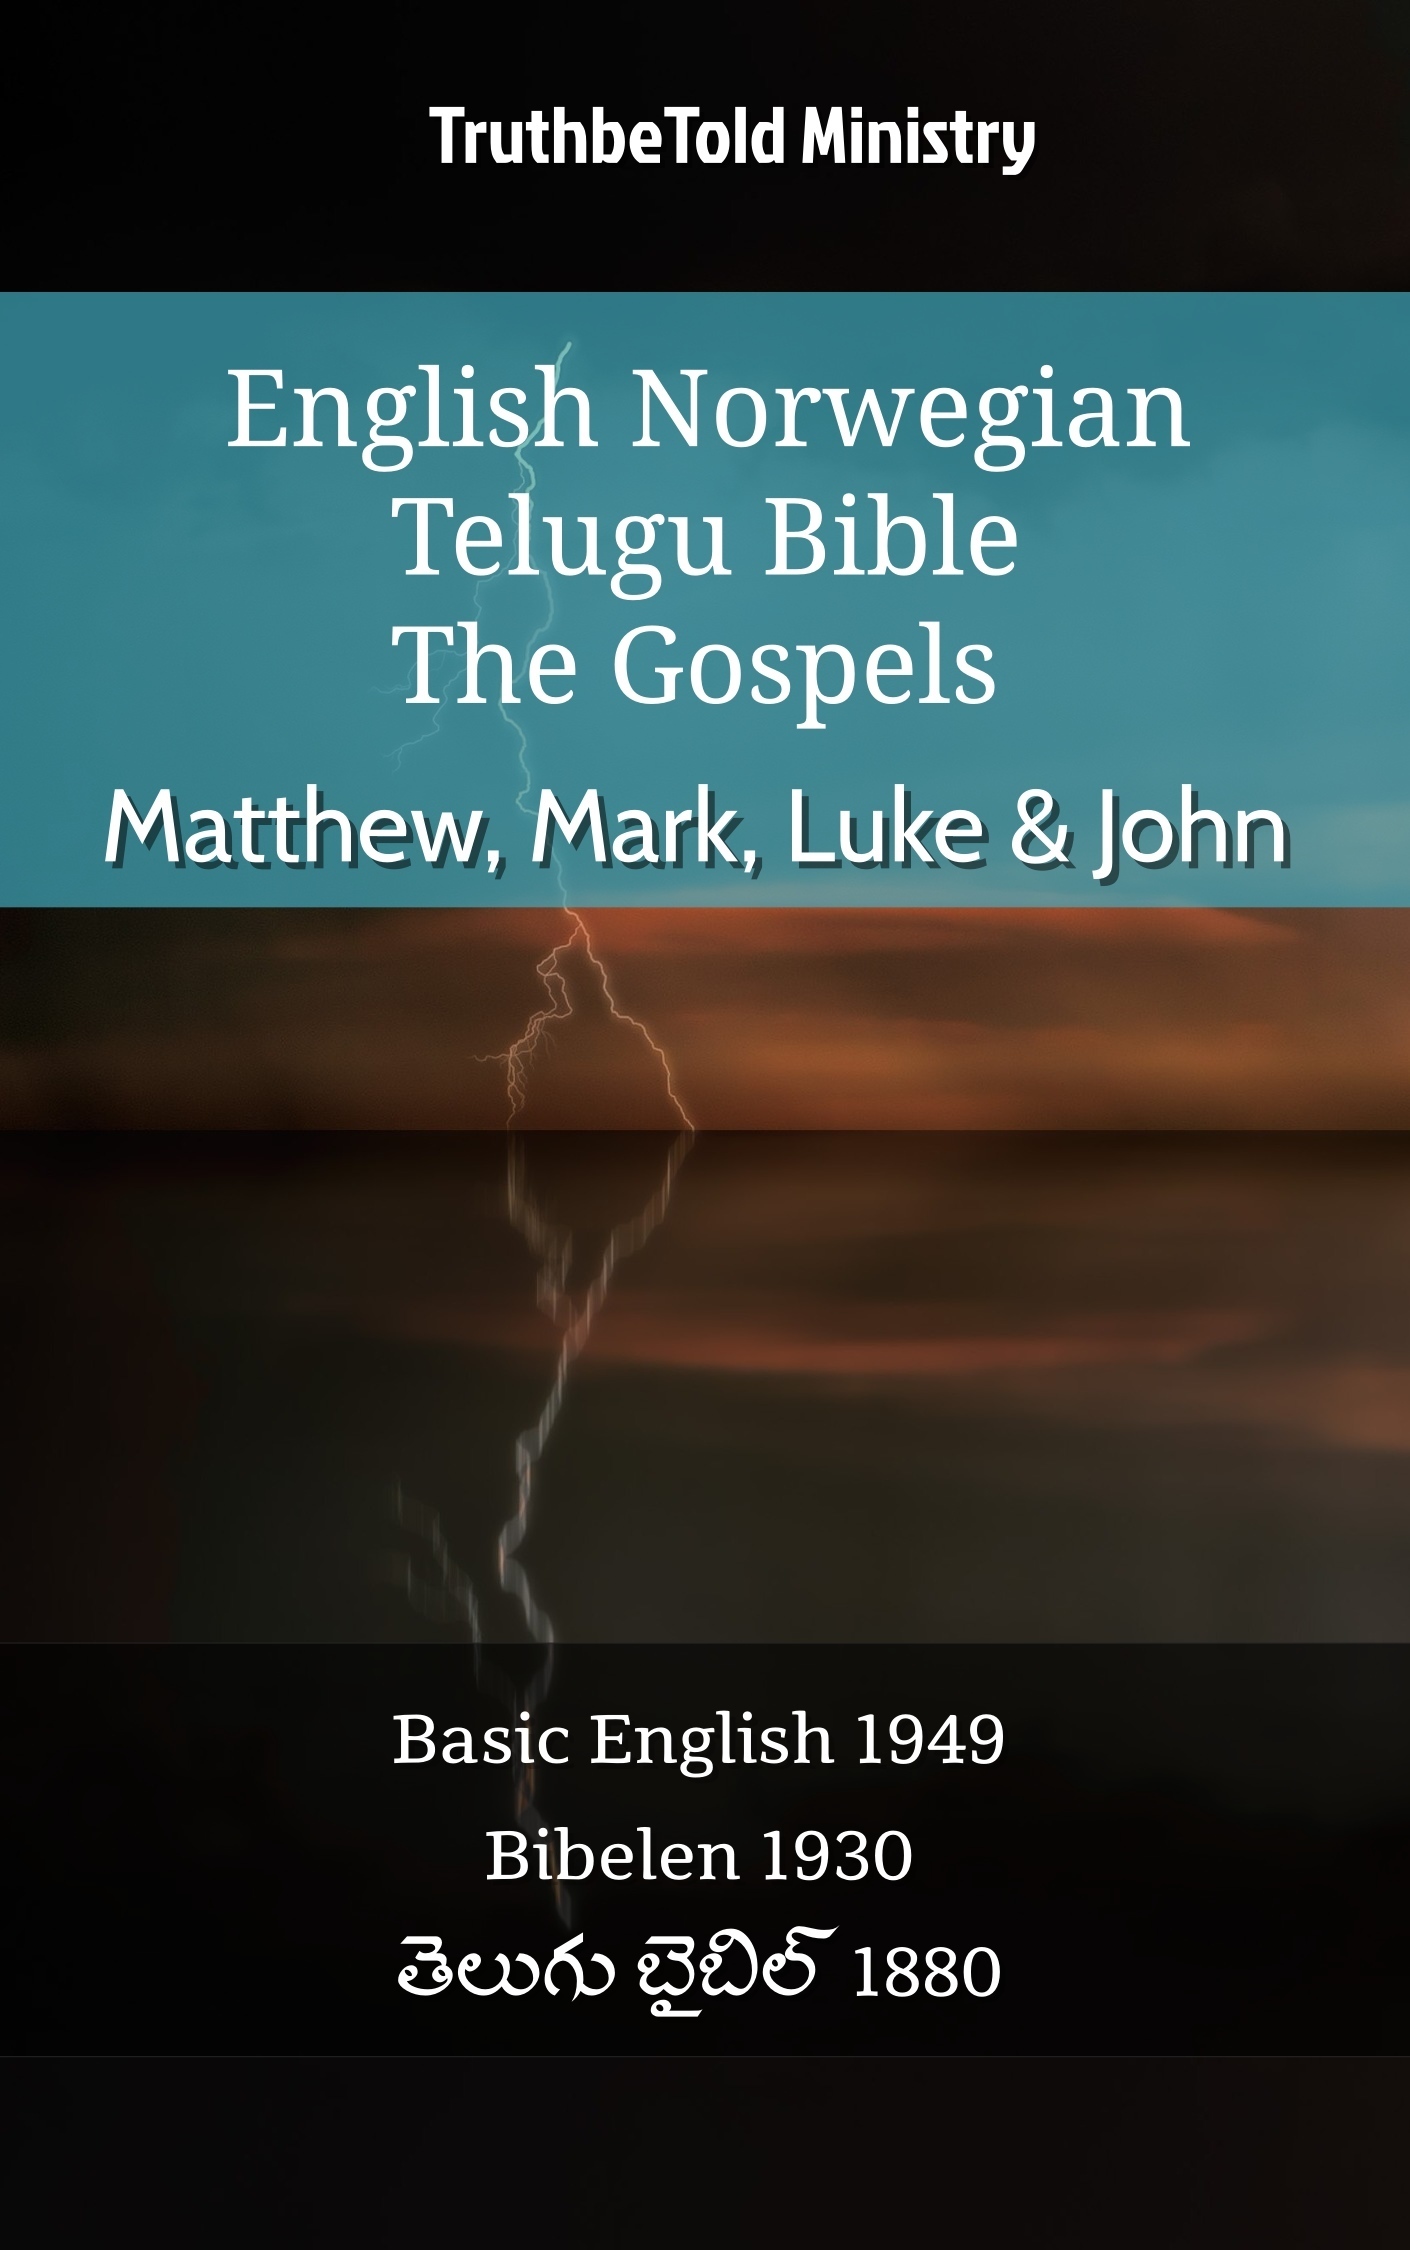 English Norwegian Telugu Bible - The Gospels - Matthew, Mark, Luke & John